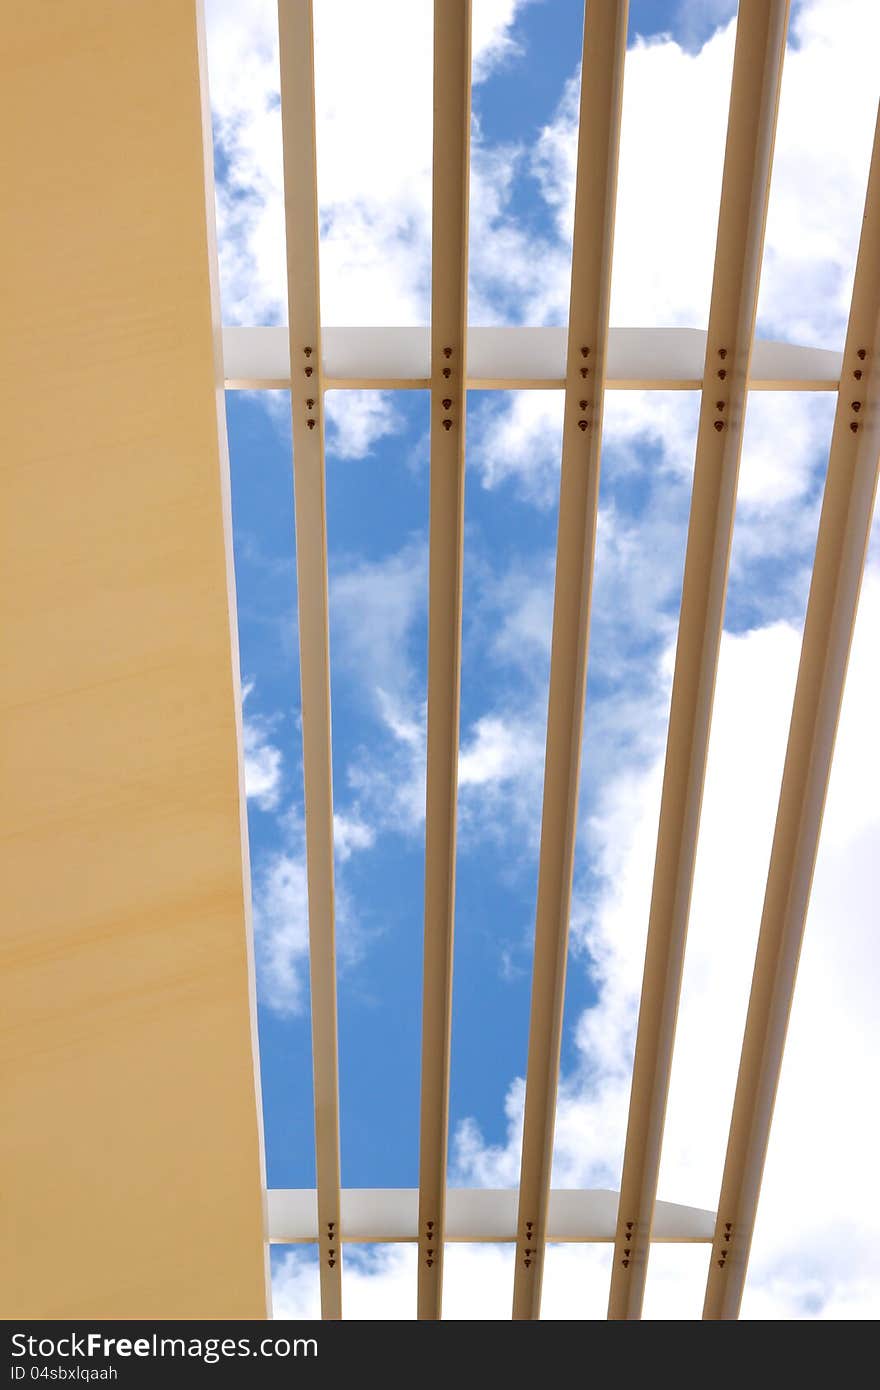 Aluminium louver or sun shade with blue sky background. Aluminium louver or sun shade with blue sky background